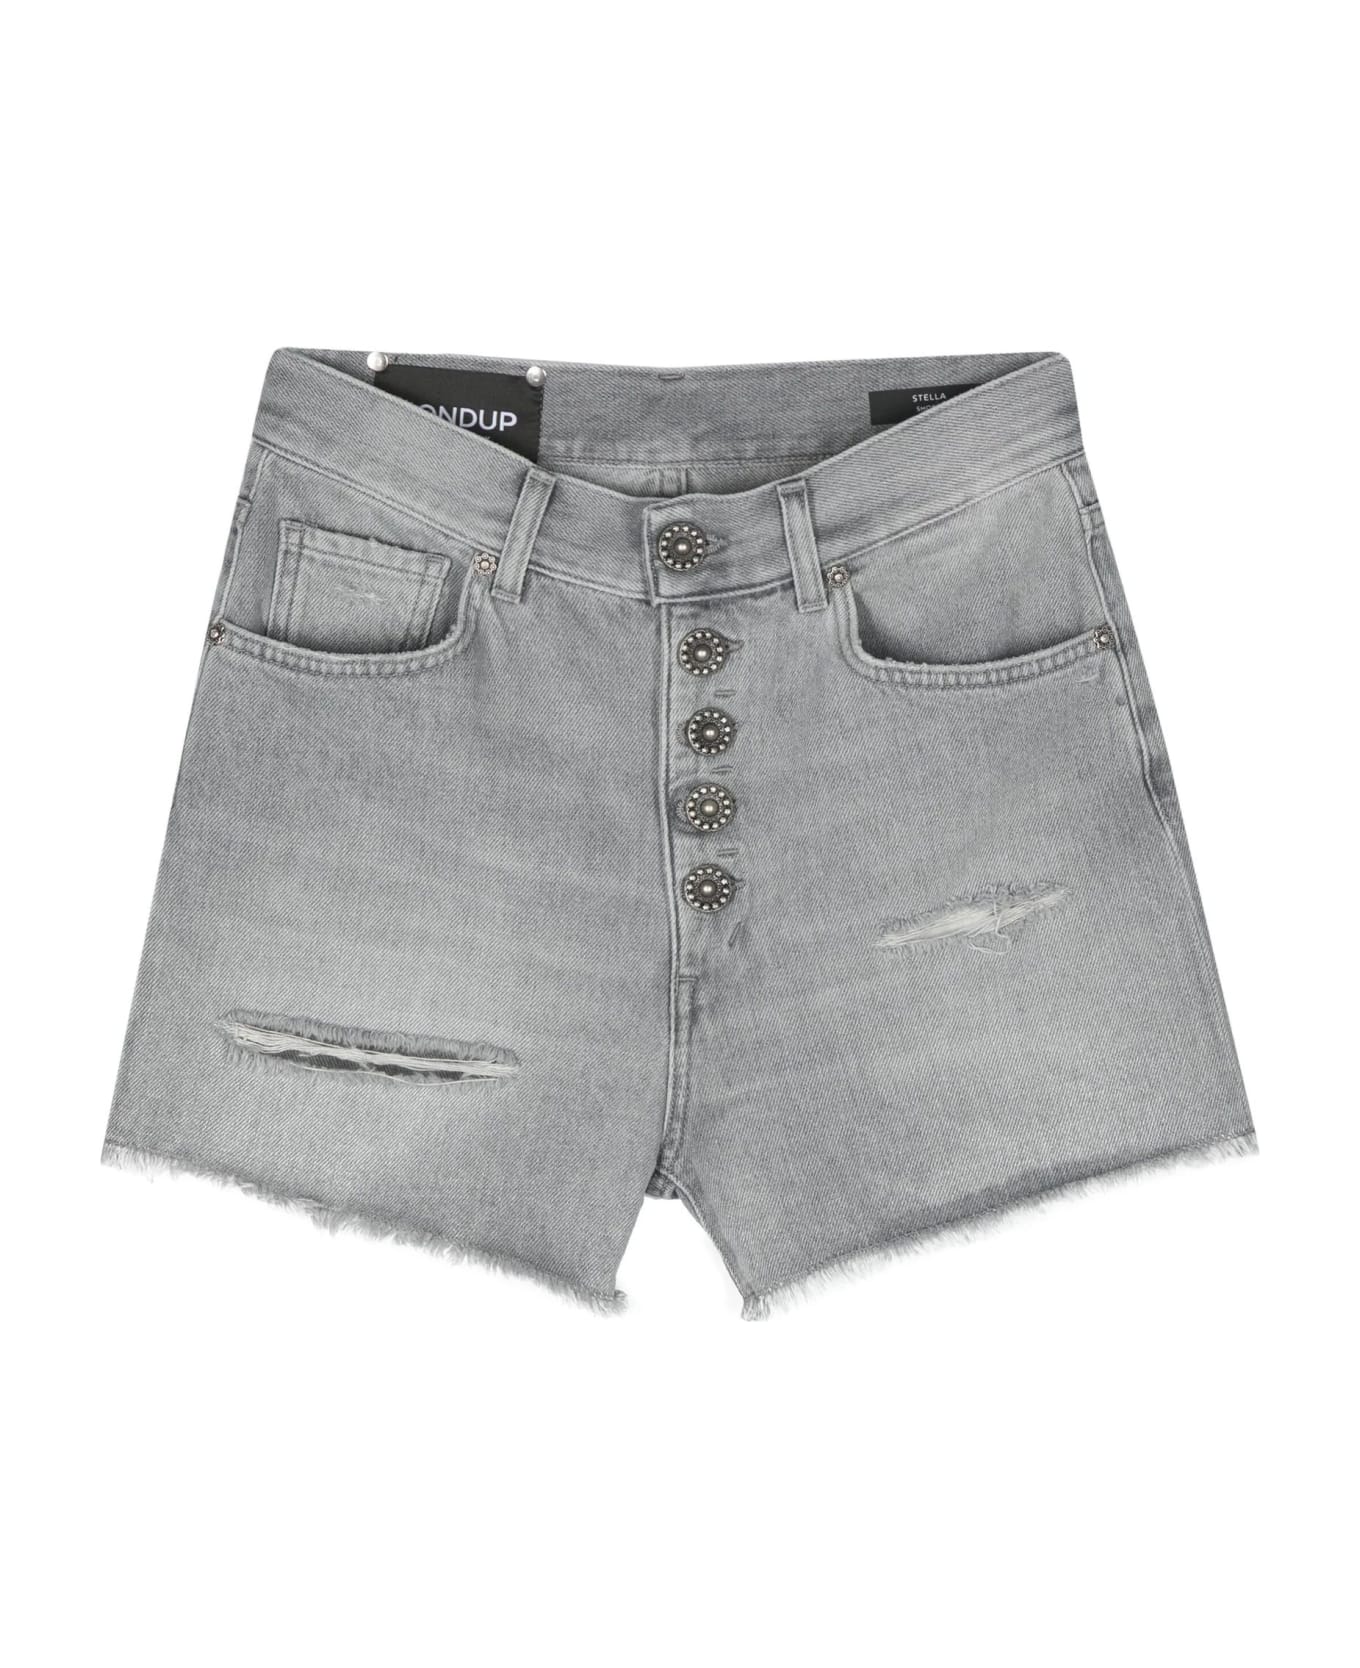 Dondup Light Grey Cotton Denim Shorts - Grey